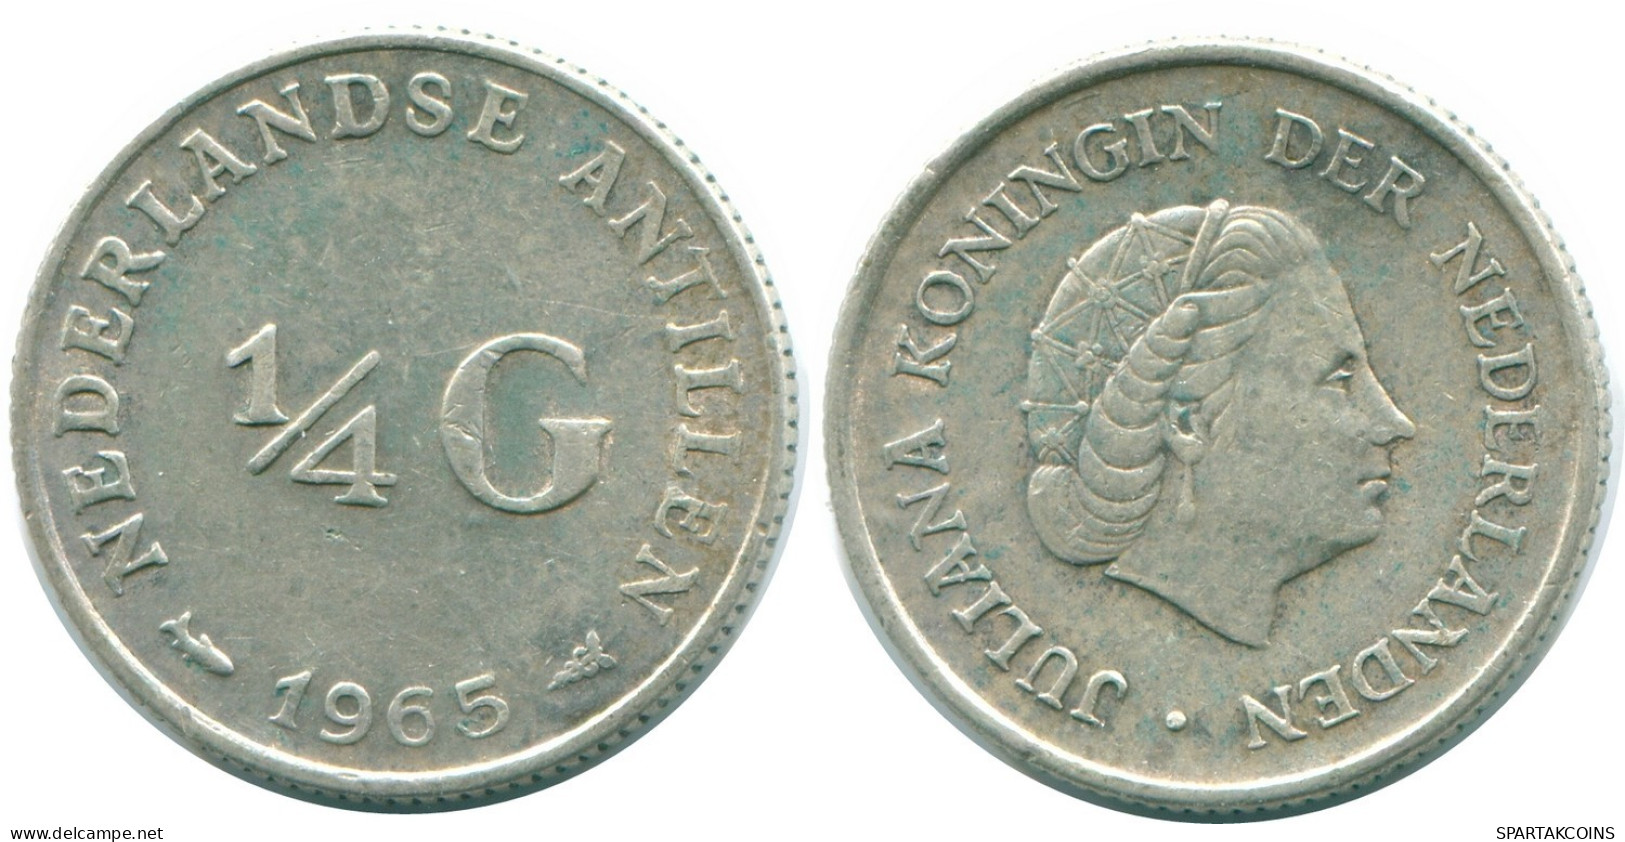 1/4 GULDEN 1965 NETHERLANDS ANTILLES SILVER Colonial Coin #NL11279.4.U.A - Netherlands Antilles